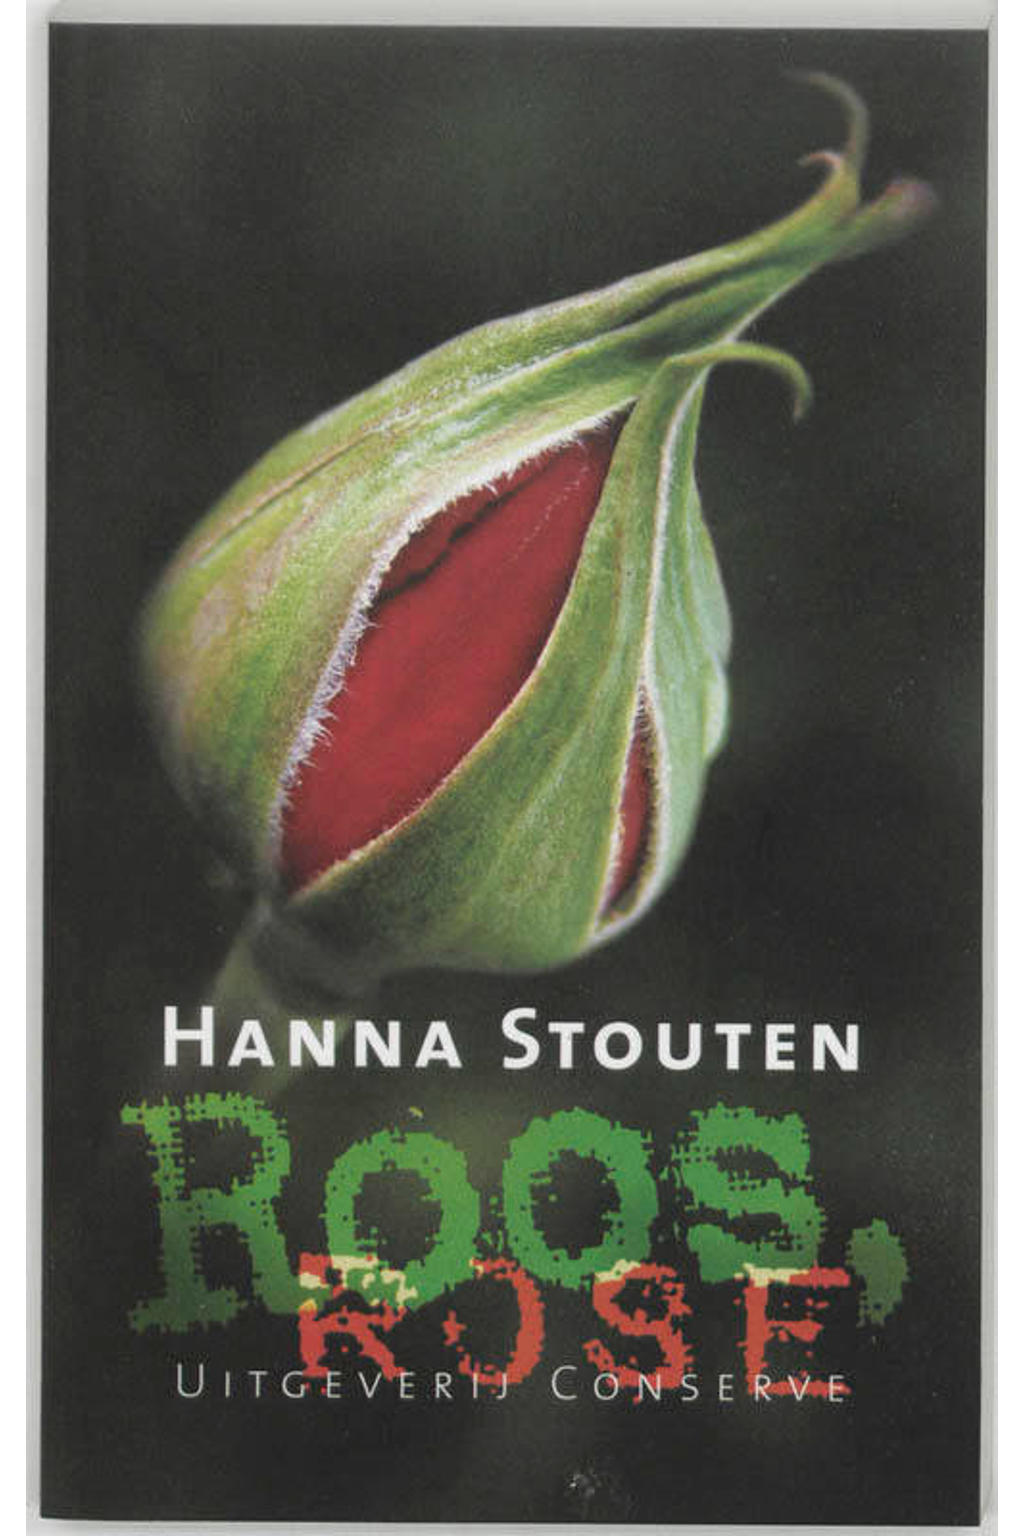 Roos, Rose - H. Stouten